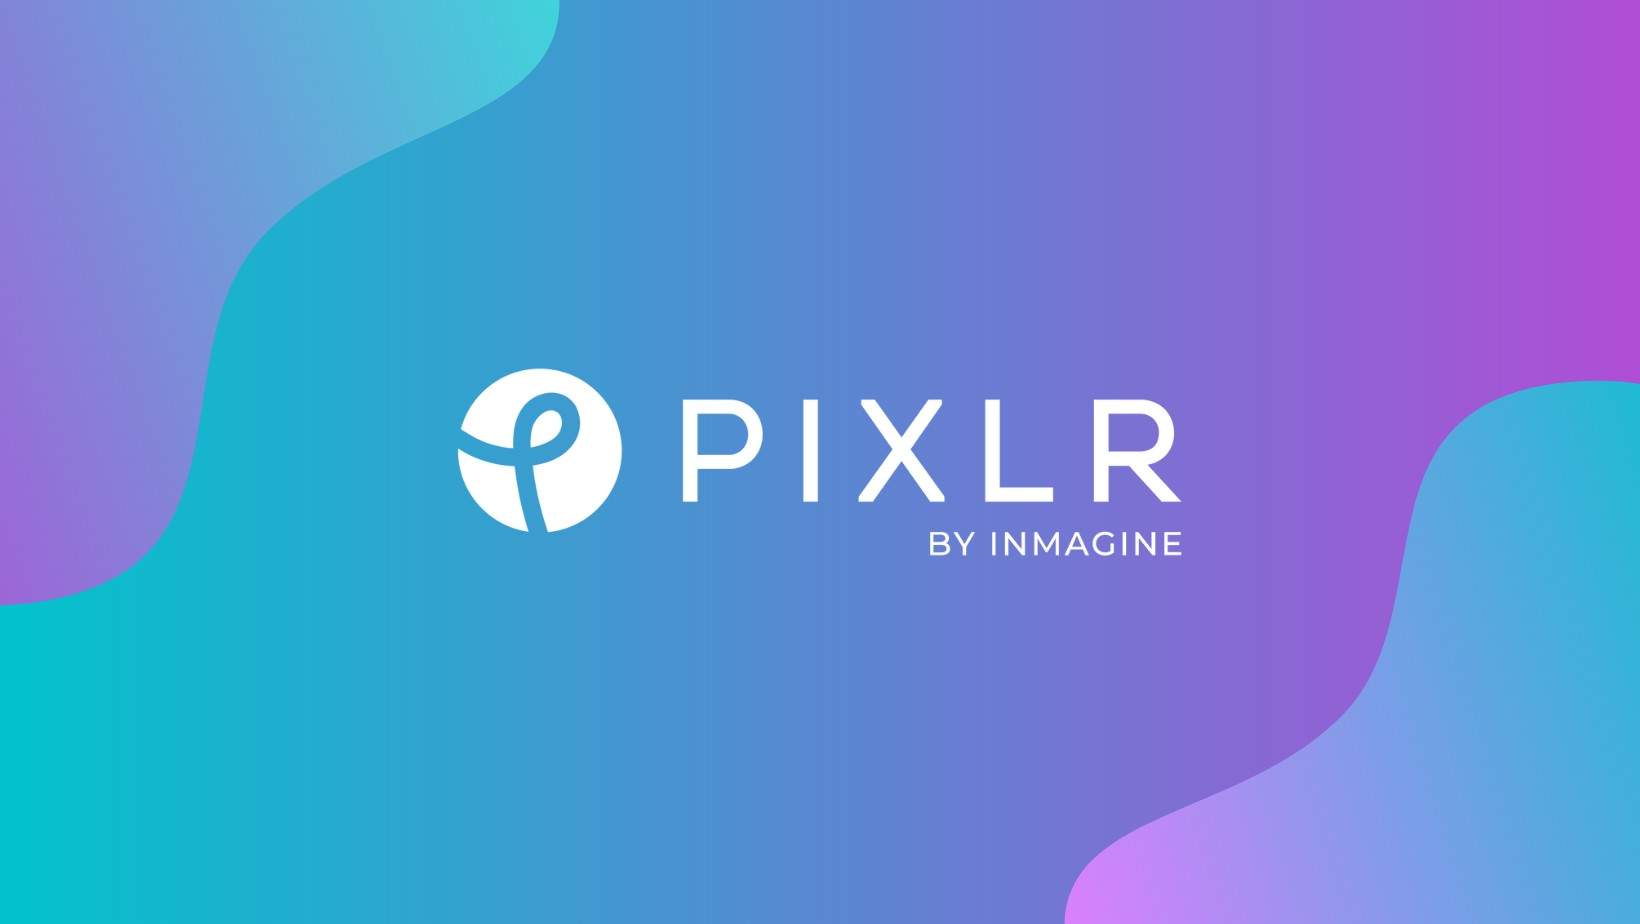 Pixlr Logo Design